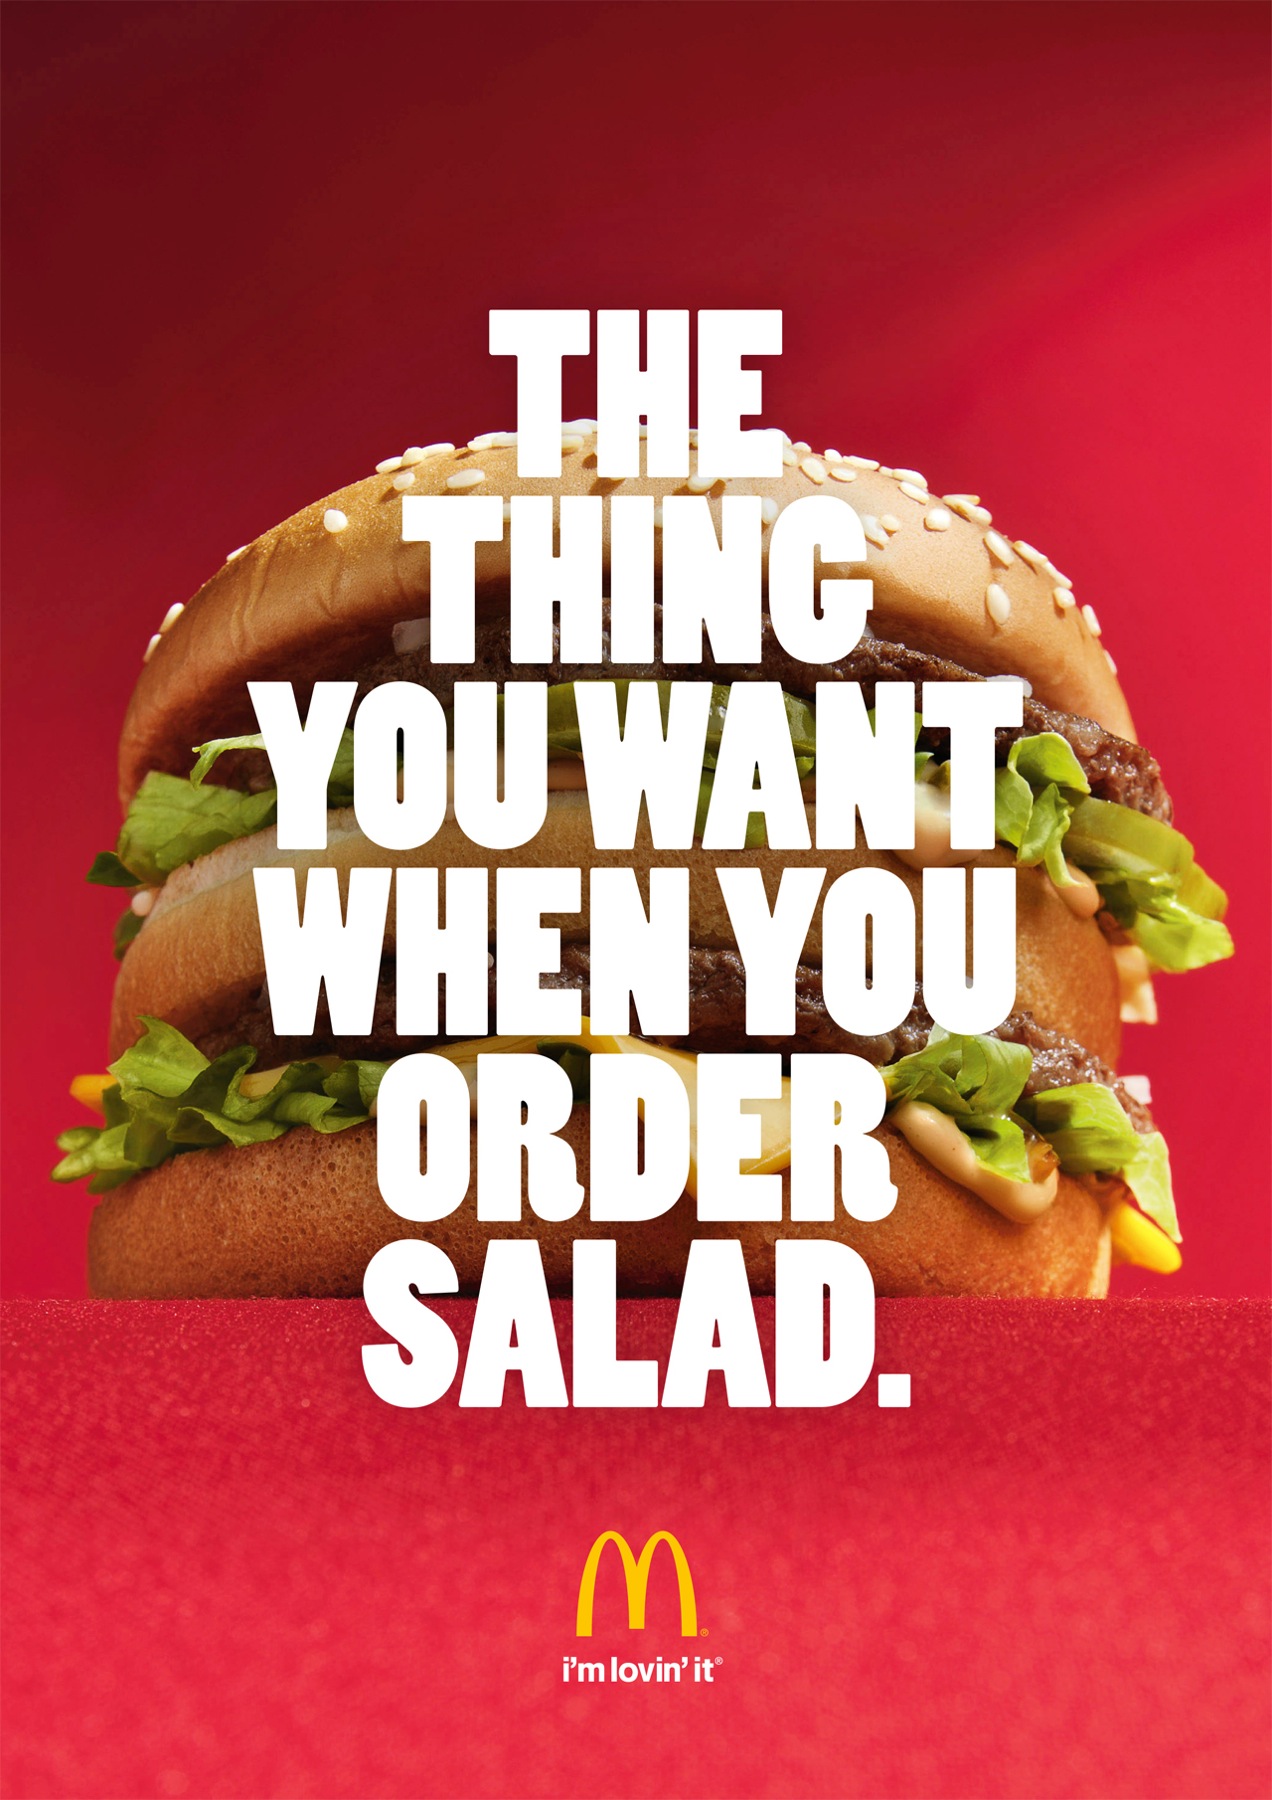 Mcdonalds print ad salad IDEAS MARKETING GR8 